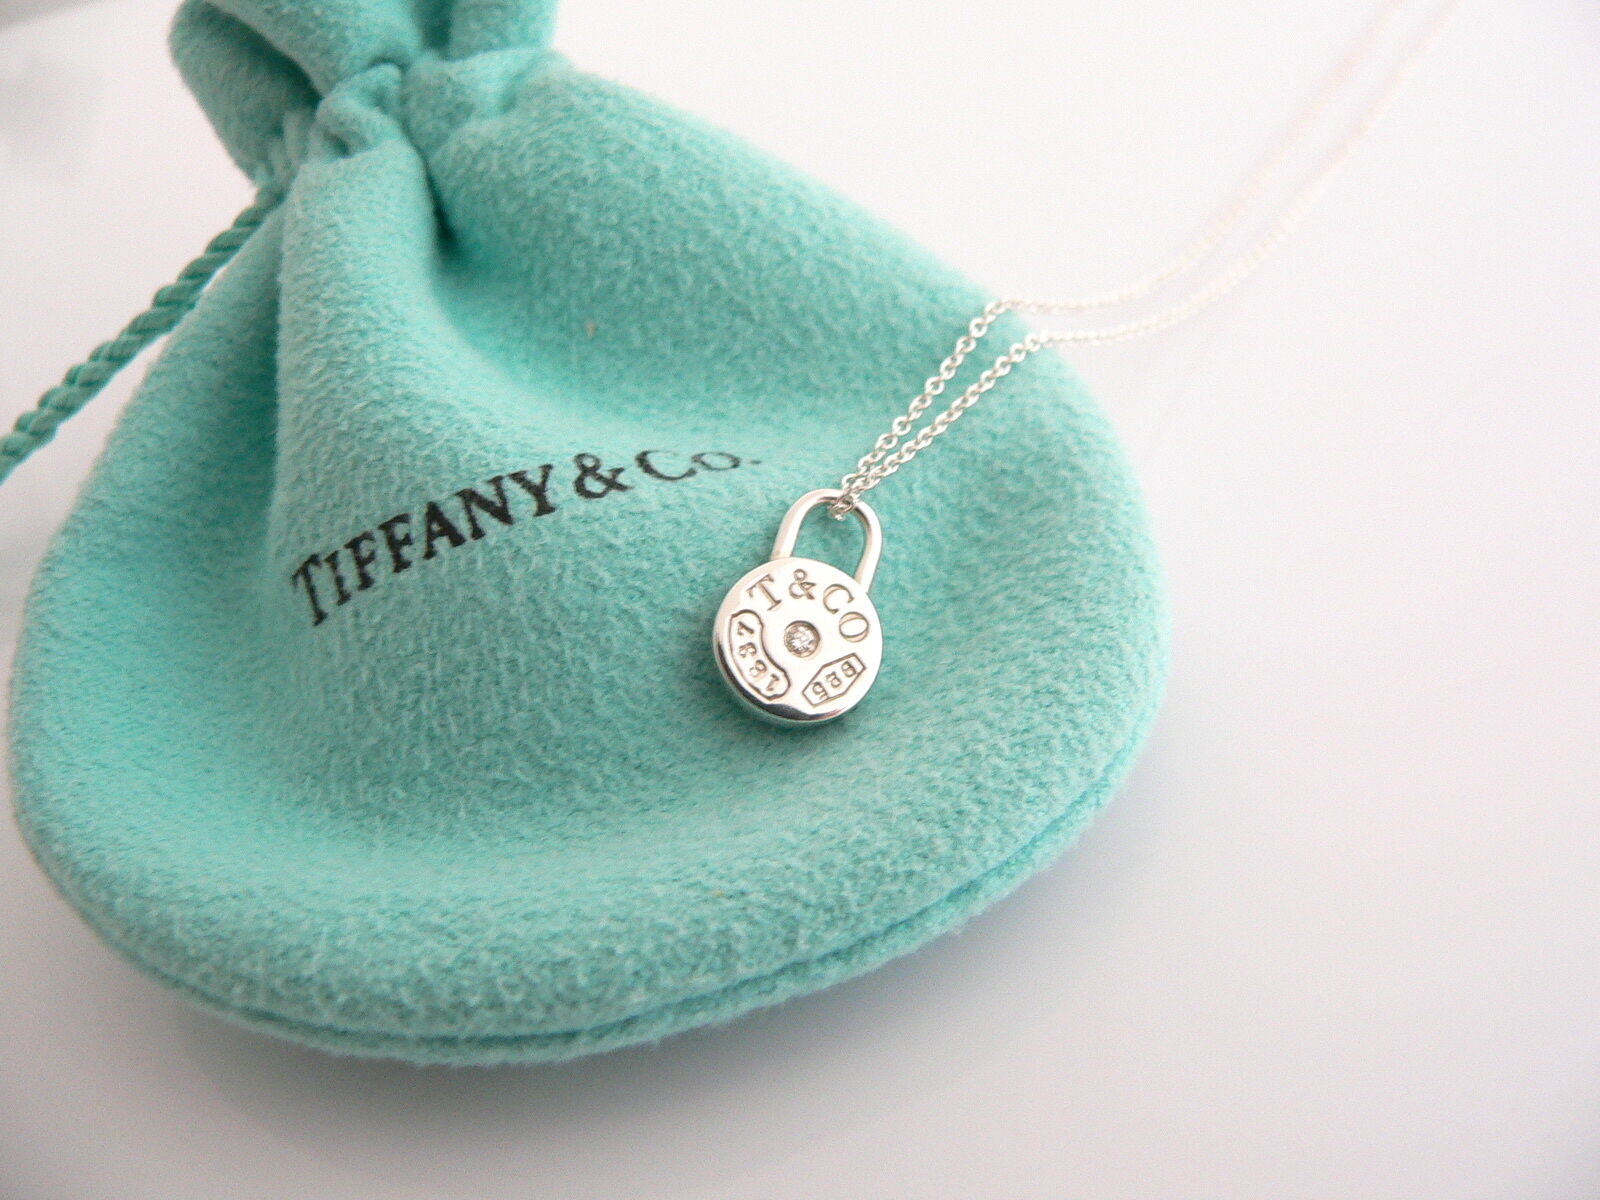 Tiffany & Co 1837 Diamond Necklace Pendant